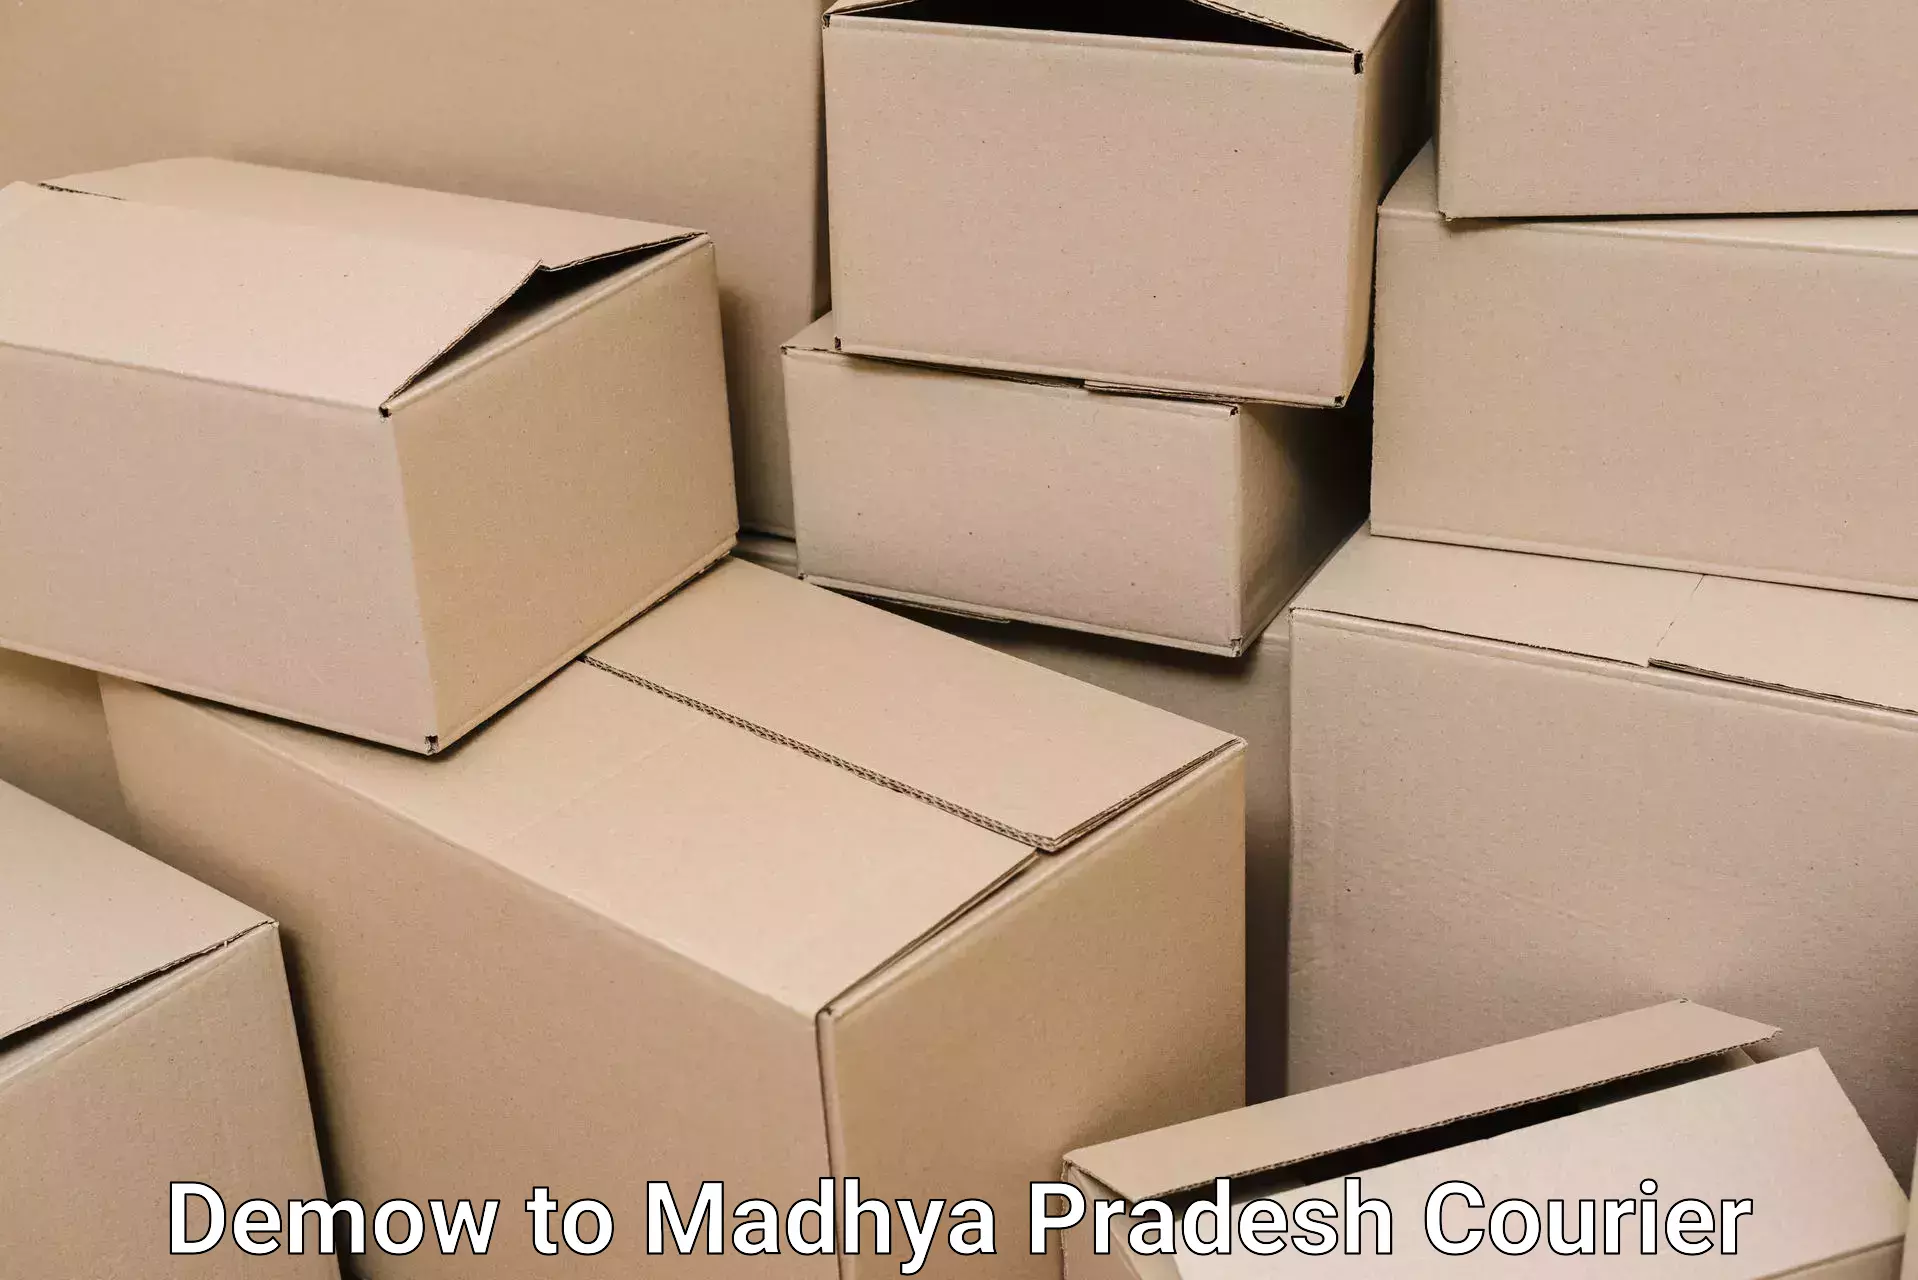 Household goods movers Demow to Madhya Pradesh